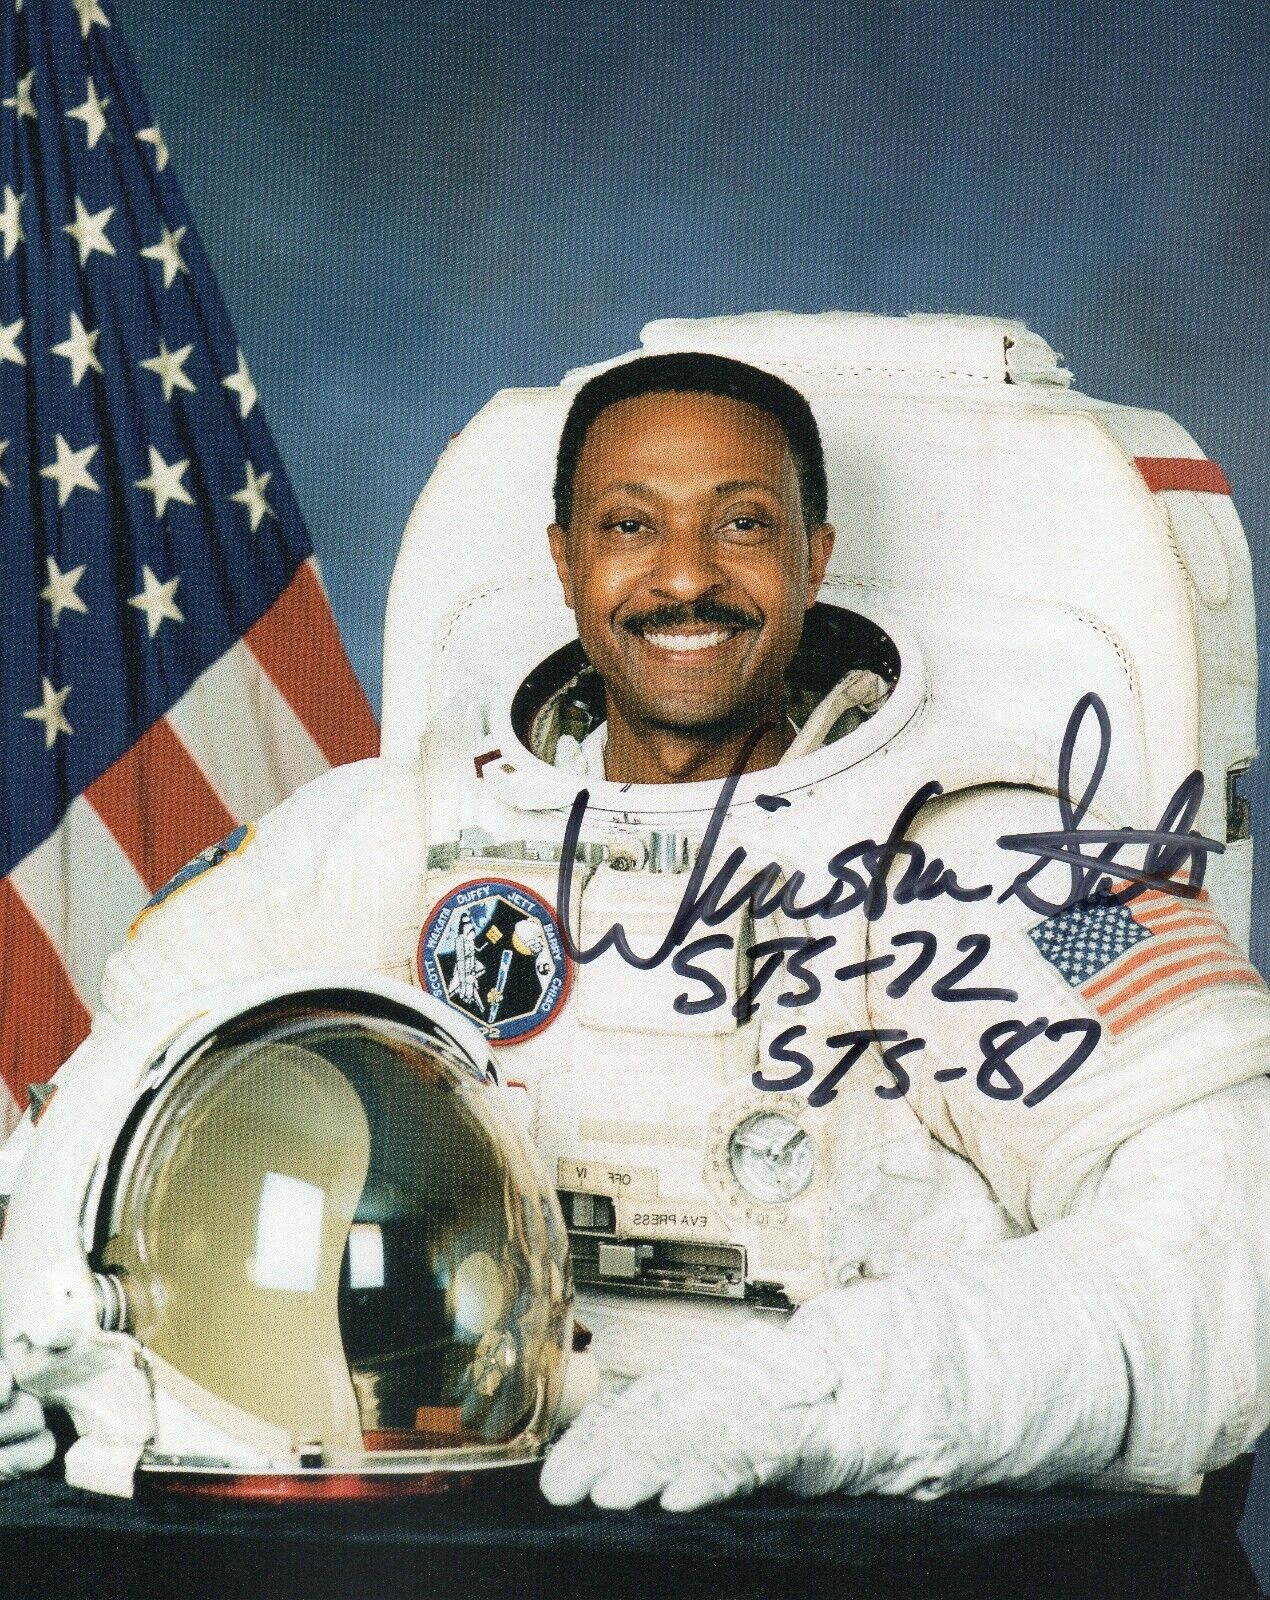 8x10 Original Autographed Photo of NASA Astronaut Winston Scott